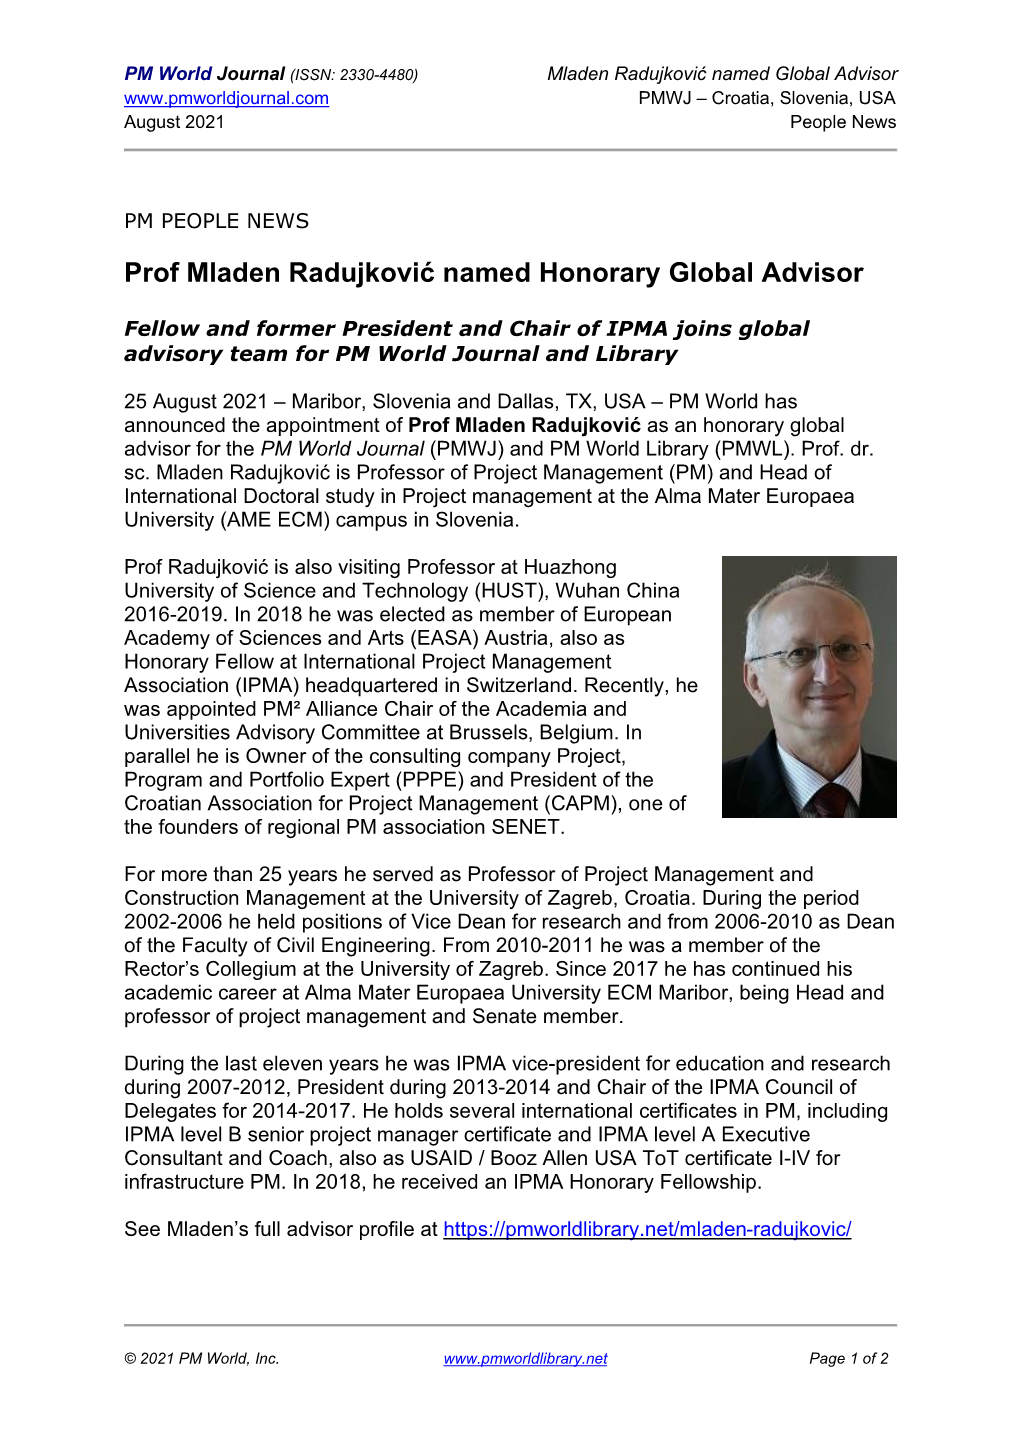 Prof Mladen Radujković Named Honorary Global Advisor